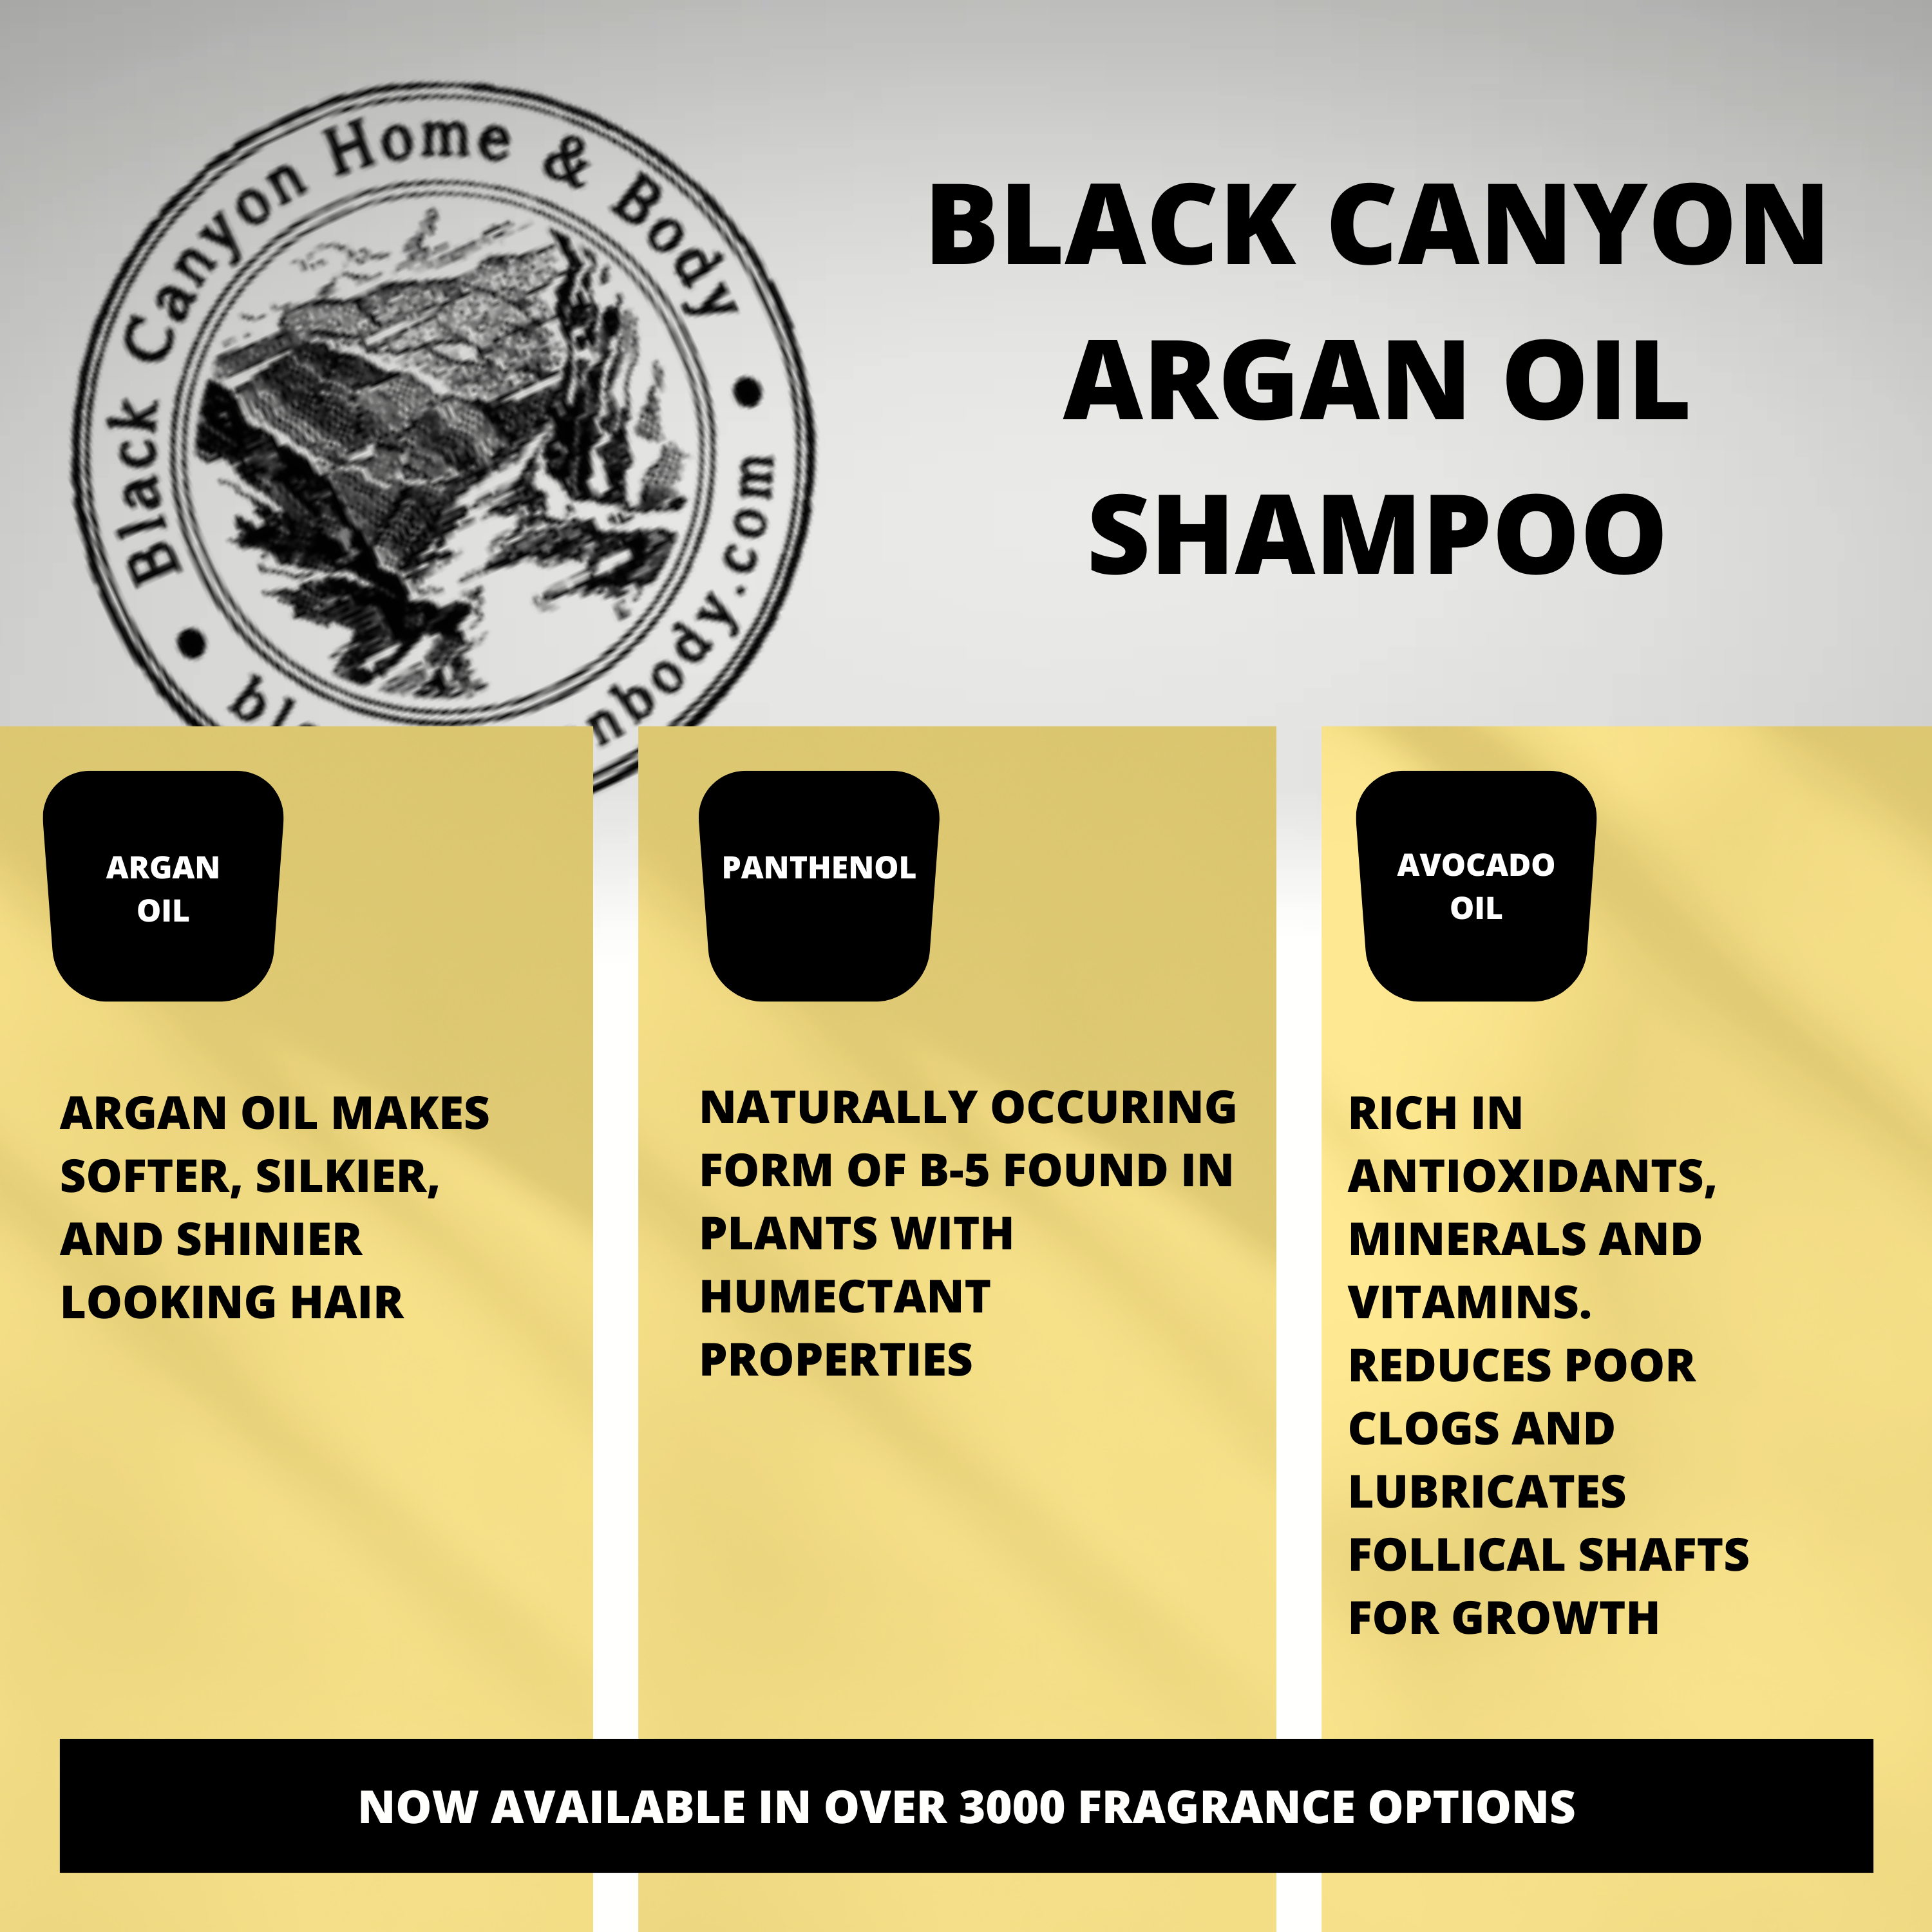 Black Canyon Pumpkin & Acorns Scented Shampoo with Argan Oil